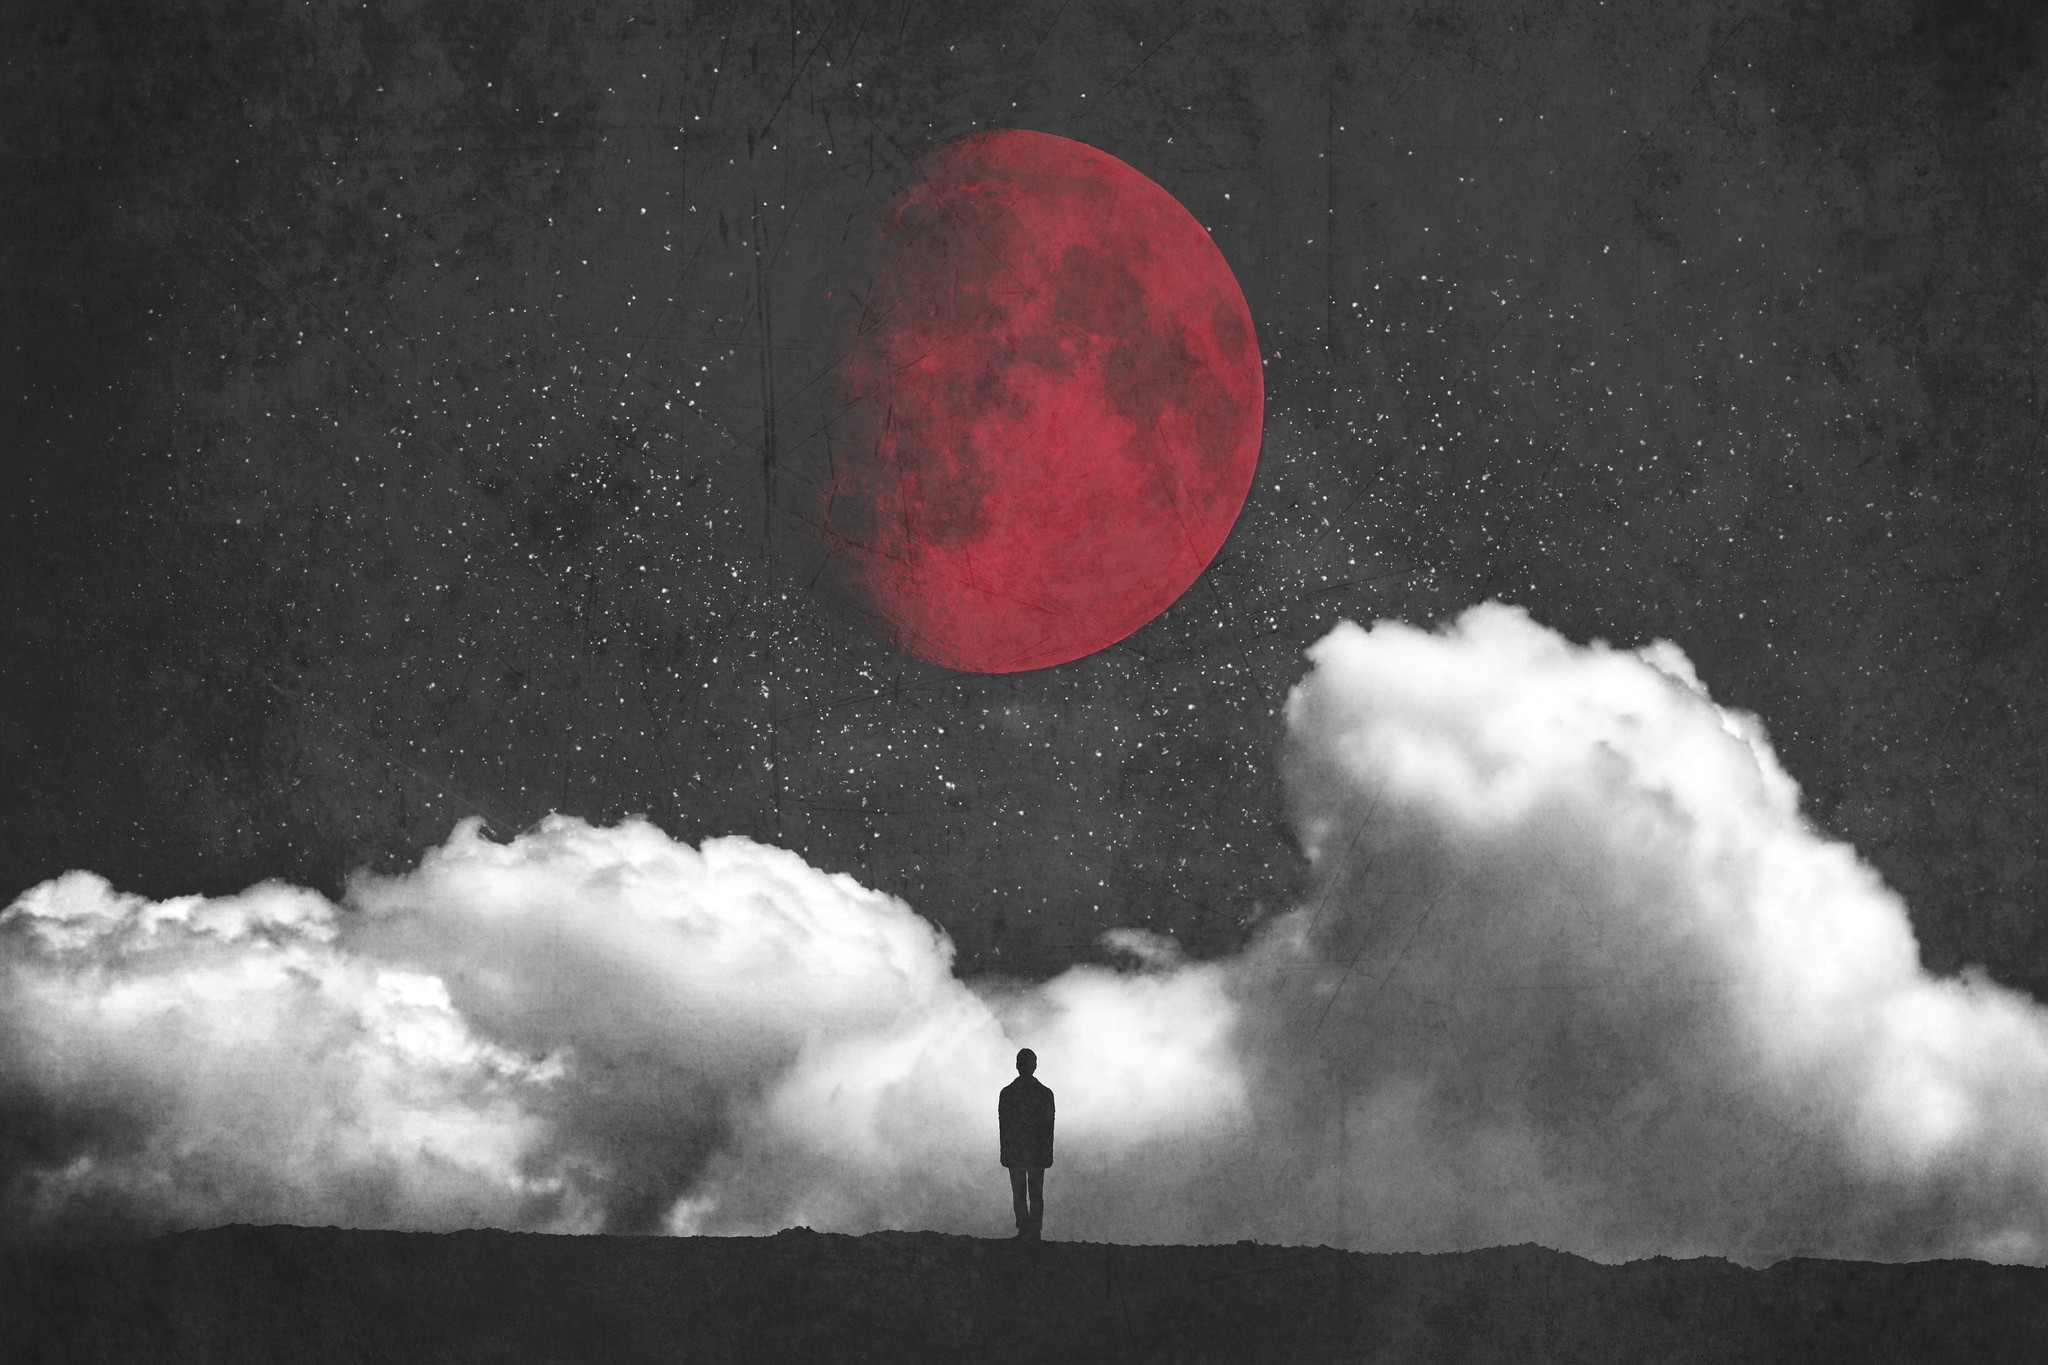 General 2048x1365 fantasy art red moon Moon clouds minimalism silhouette digital art men men outdoors standing sky selective coloring